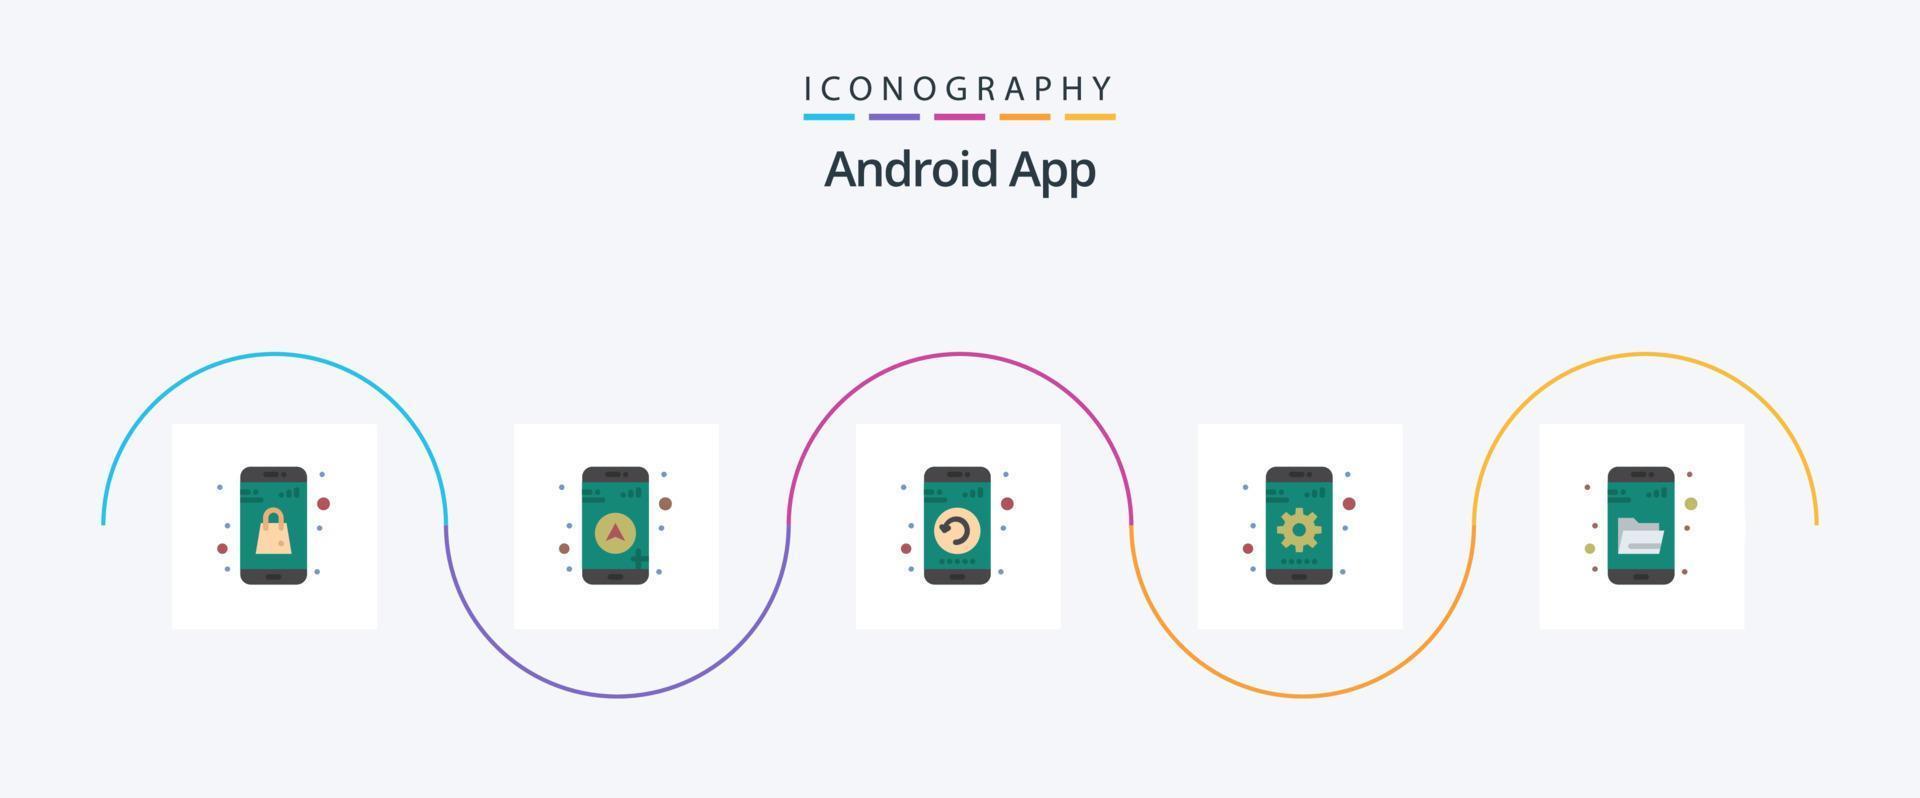 Android app flat 5 icon pack incluindo explorar. dispositivo. gadget. contexto. engrenagem vetor